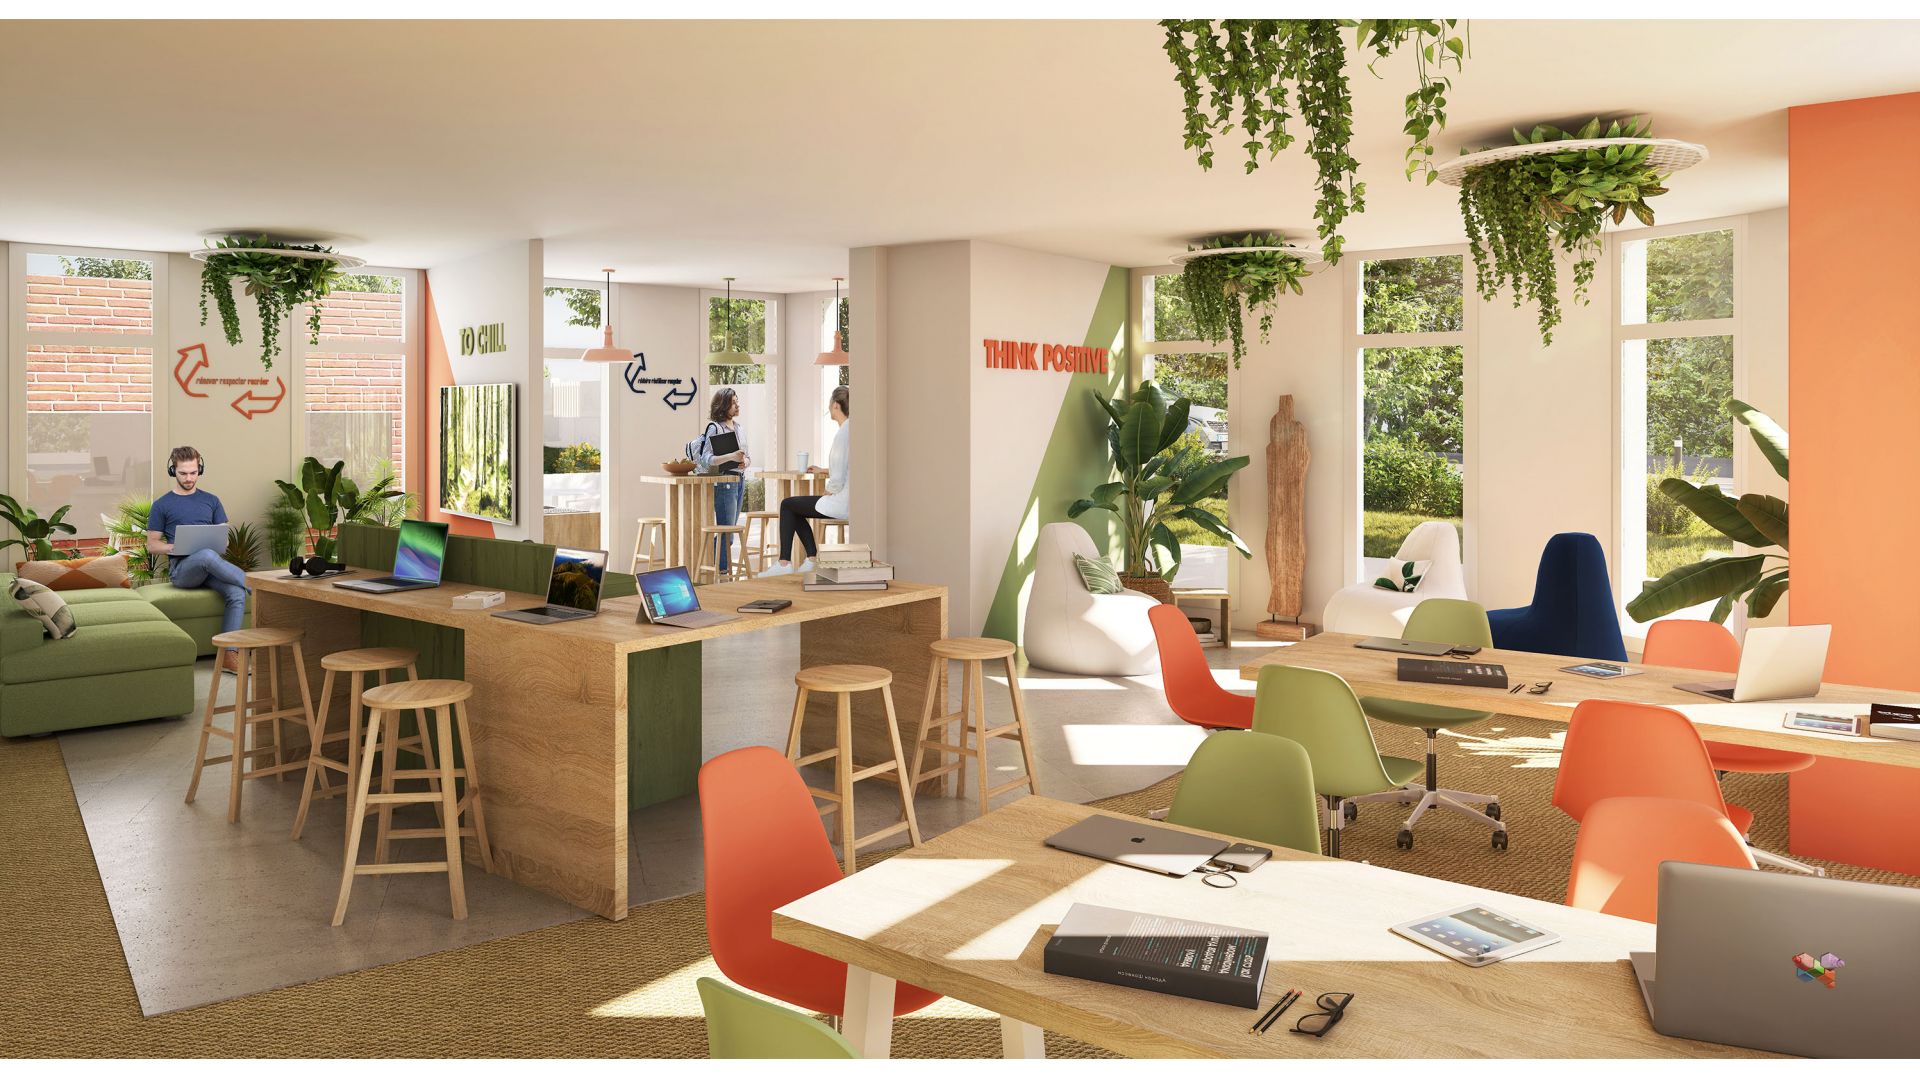 Greencity immobilier - achat appartements neufs du T1 au T5 - Résidence Co-living Le Brooklyn - Toulouse 31500